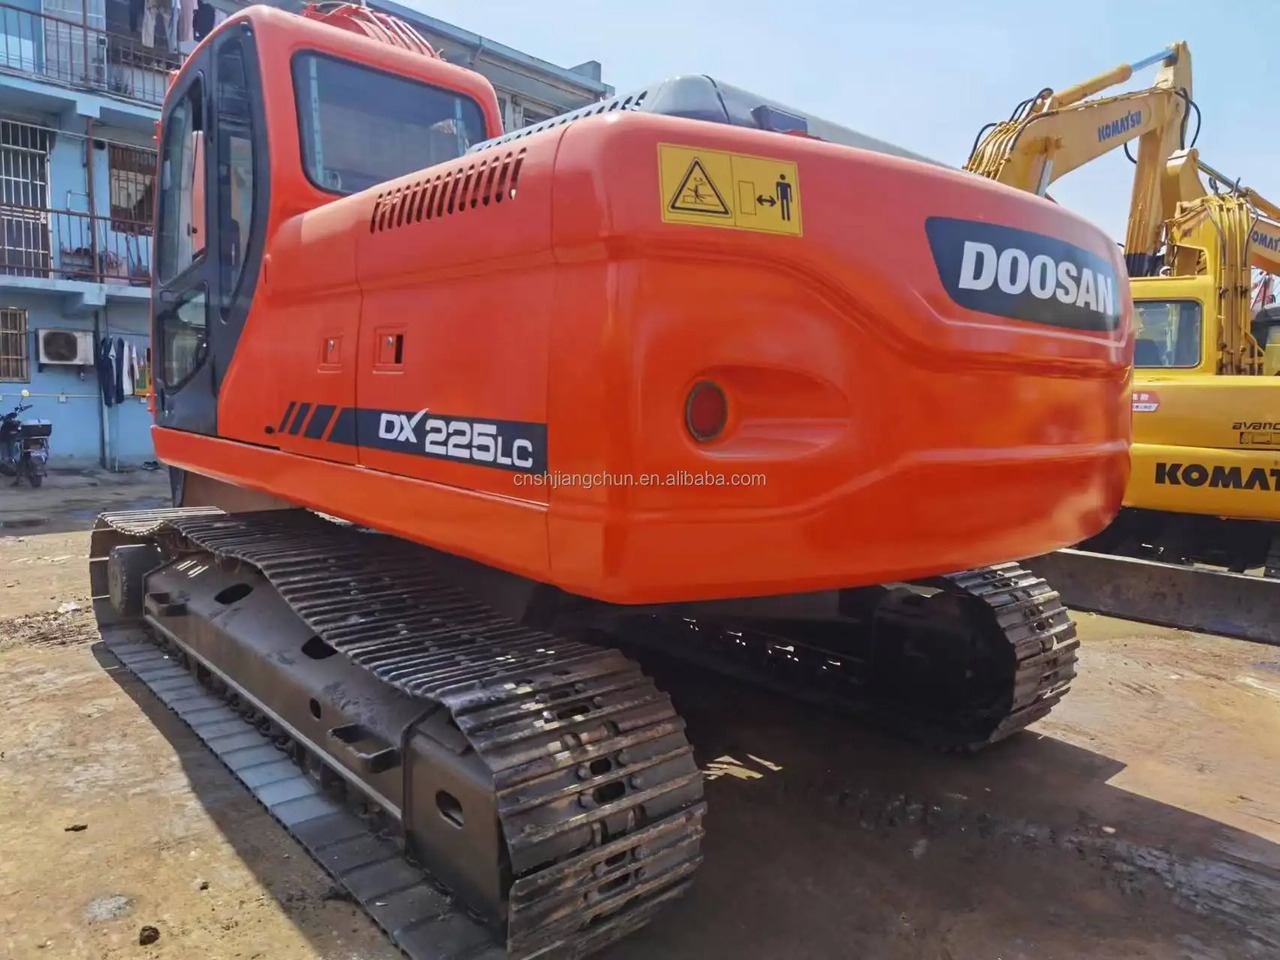 Máy xúc bánh xích second hand excavator used machinery equipment Doosan dx225 used excavators in stock for sale: hình 4